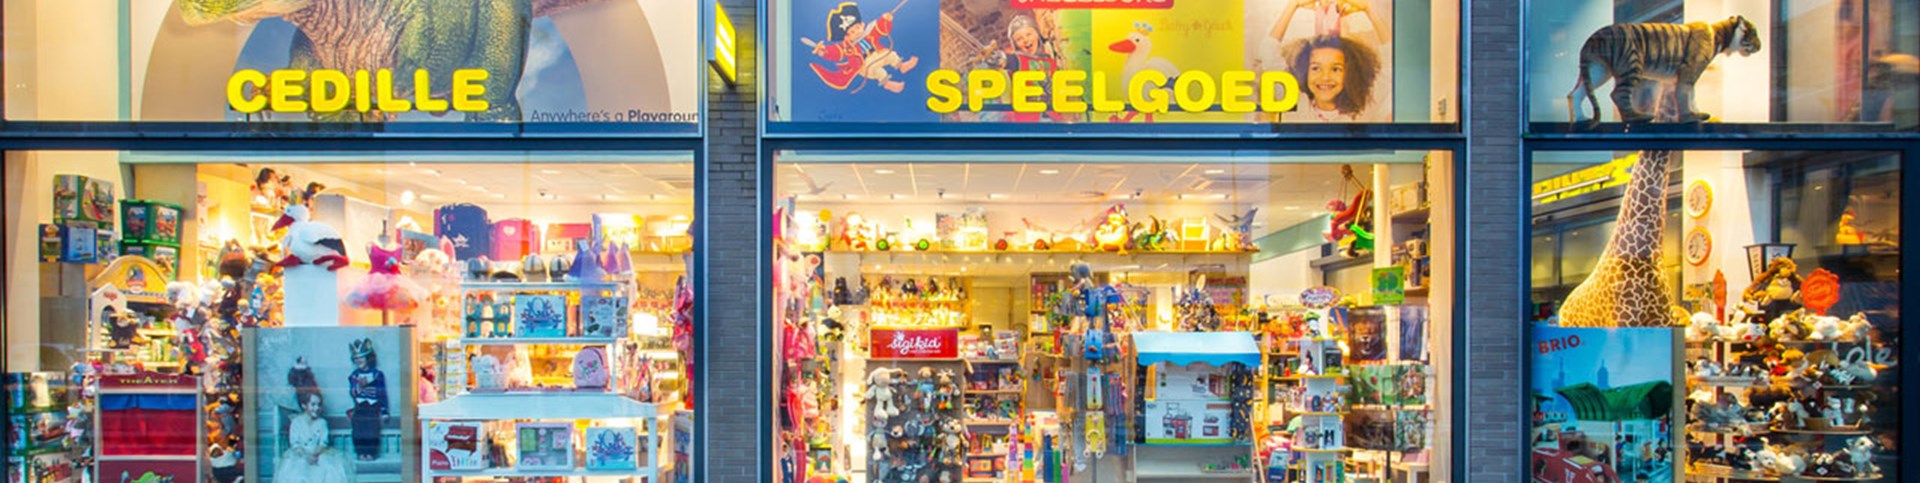 gelderlandplein cedille speelgoedwinkel